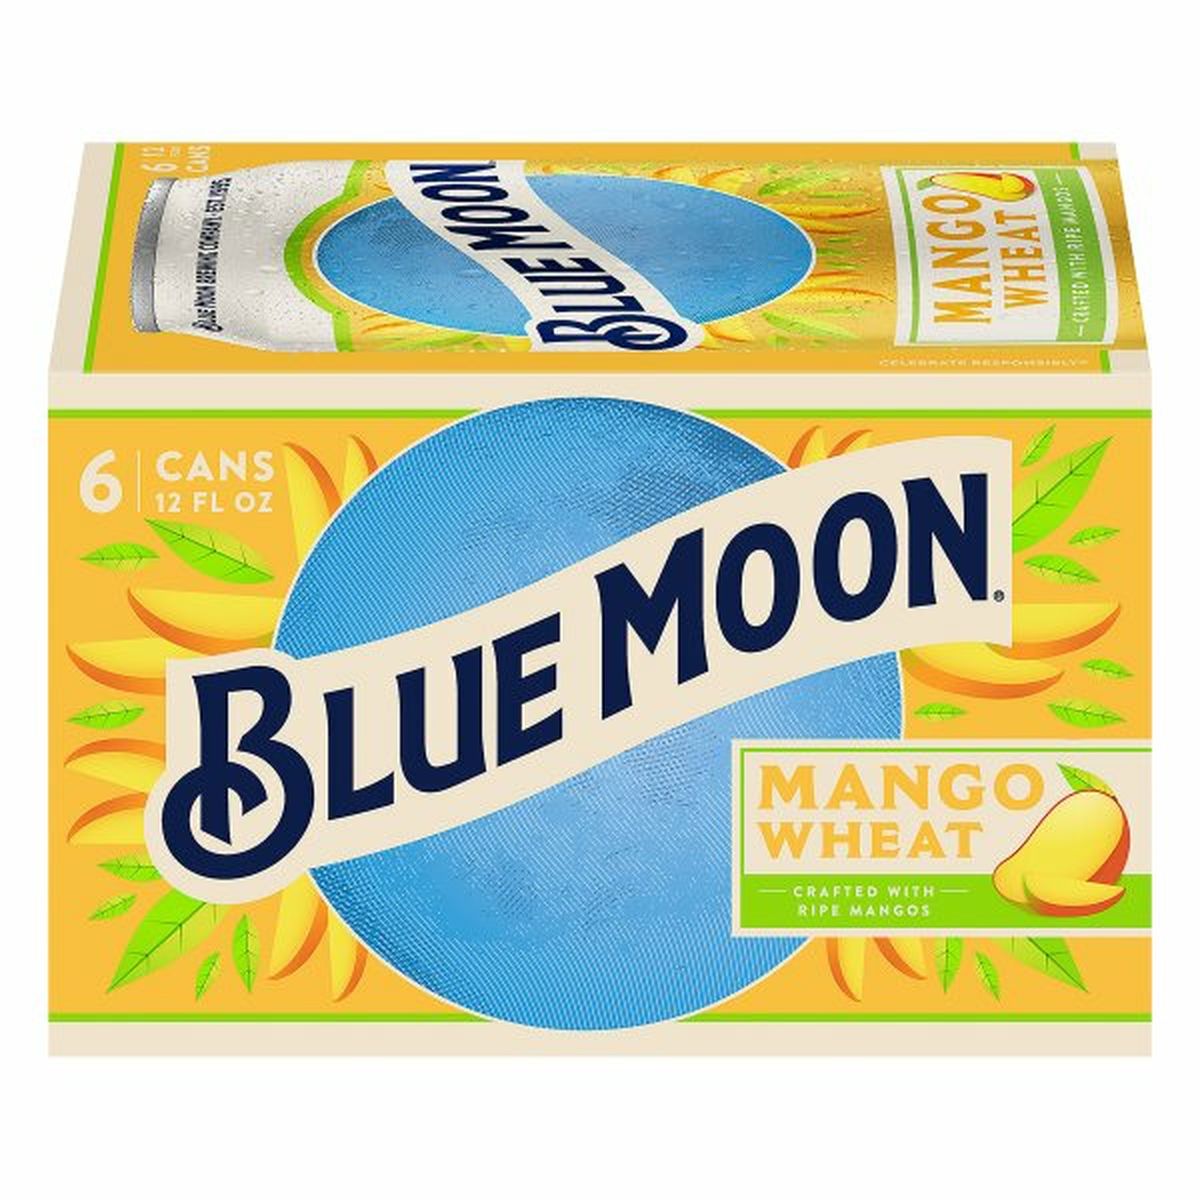 Calories in Blue Moon Mango Wheat Ale 6/12oz cans